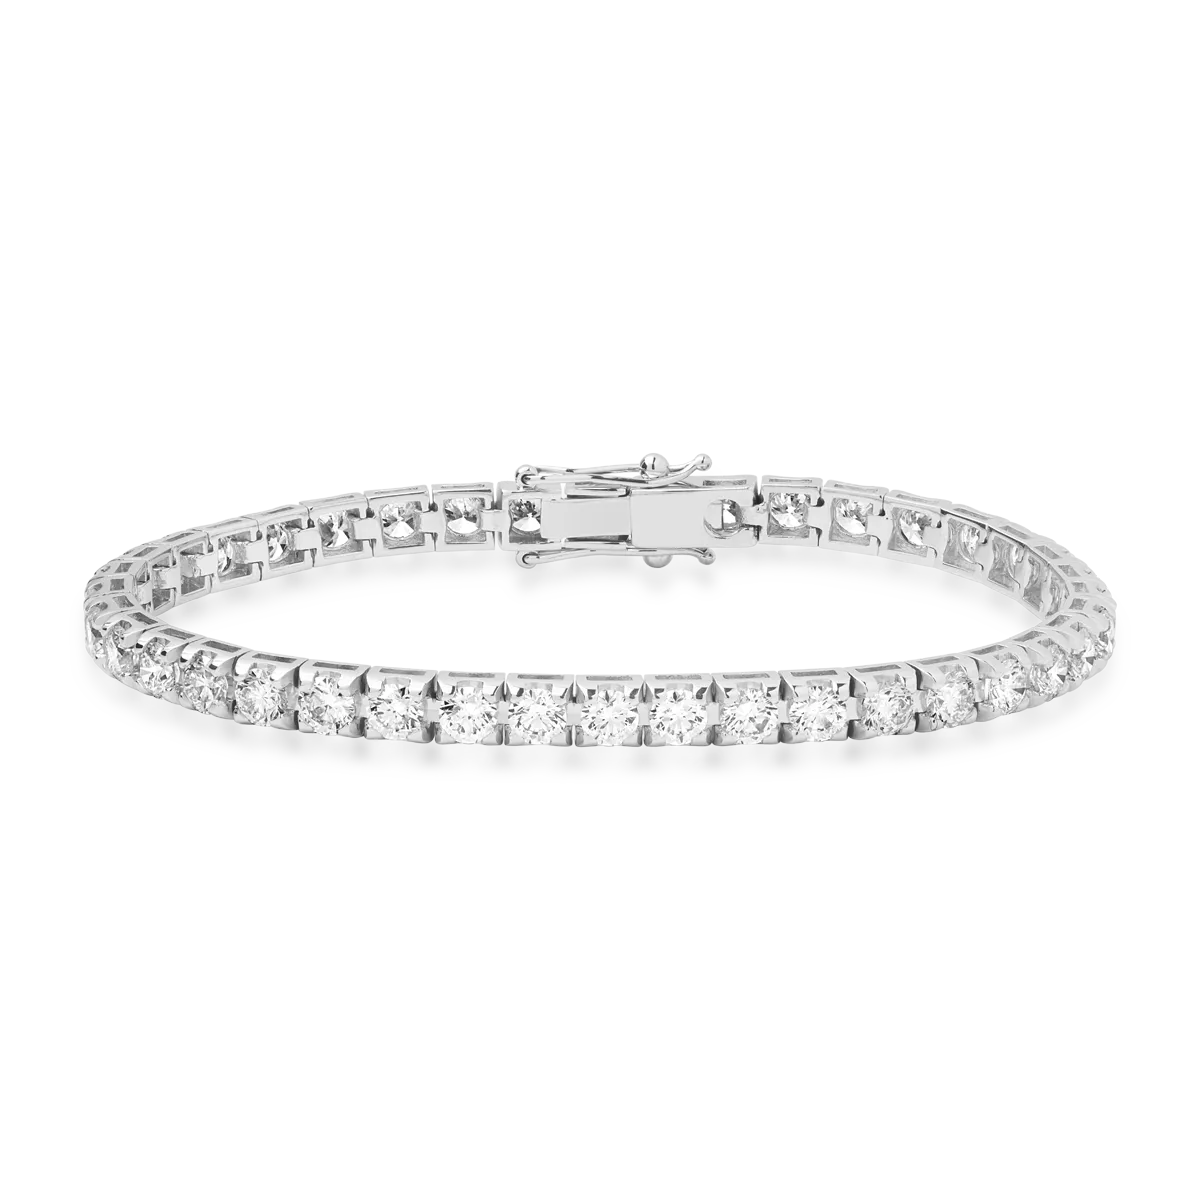 18K white gold tennis bracelet with diamonds of 6.5ct